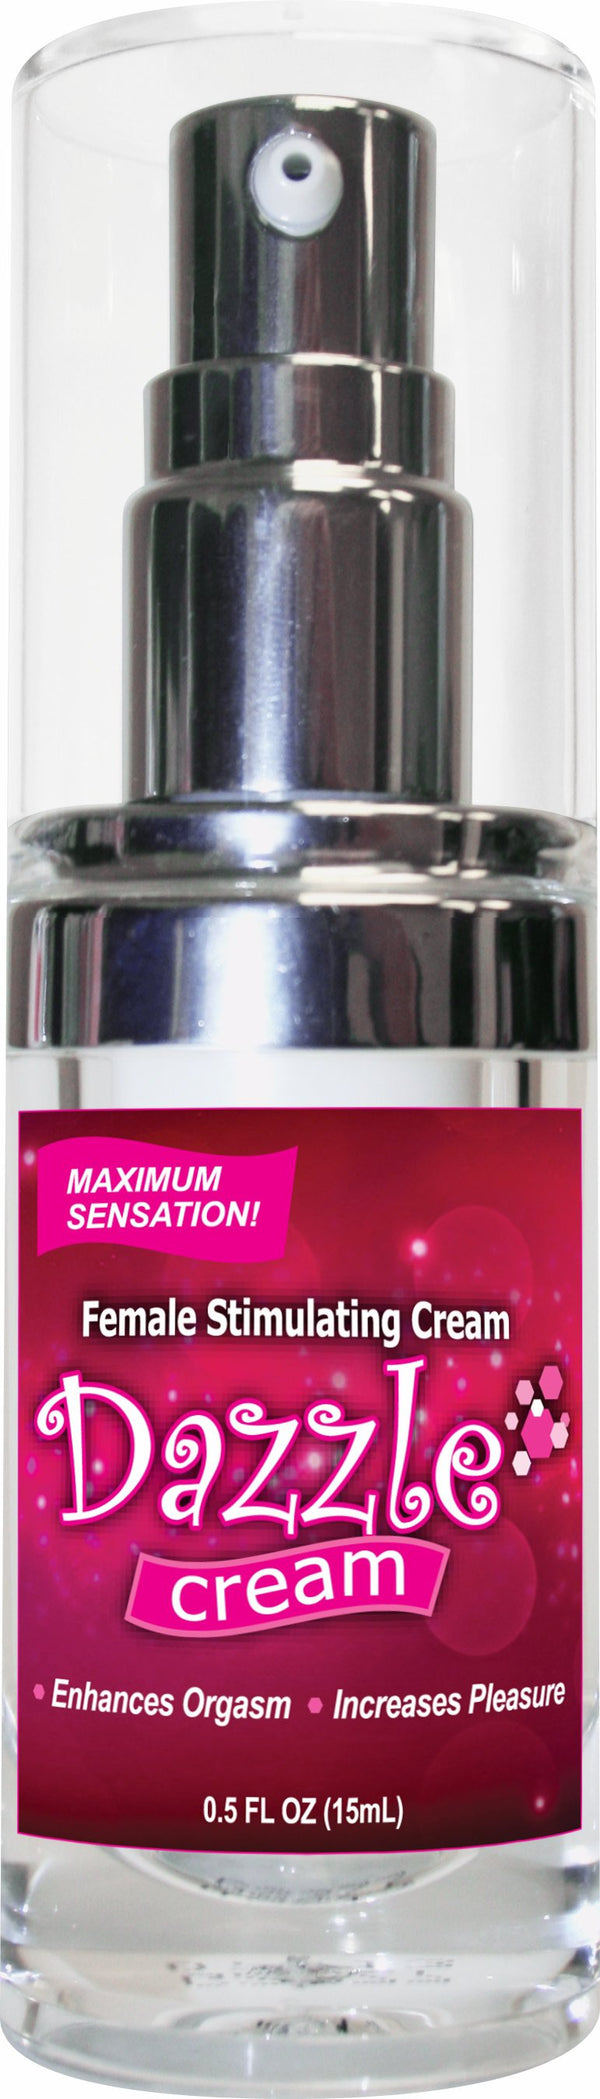 Body Action Products Dazzle Cream Female Stimulating Cream 0.5 Oz at $21.99